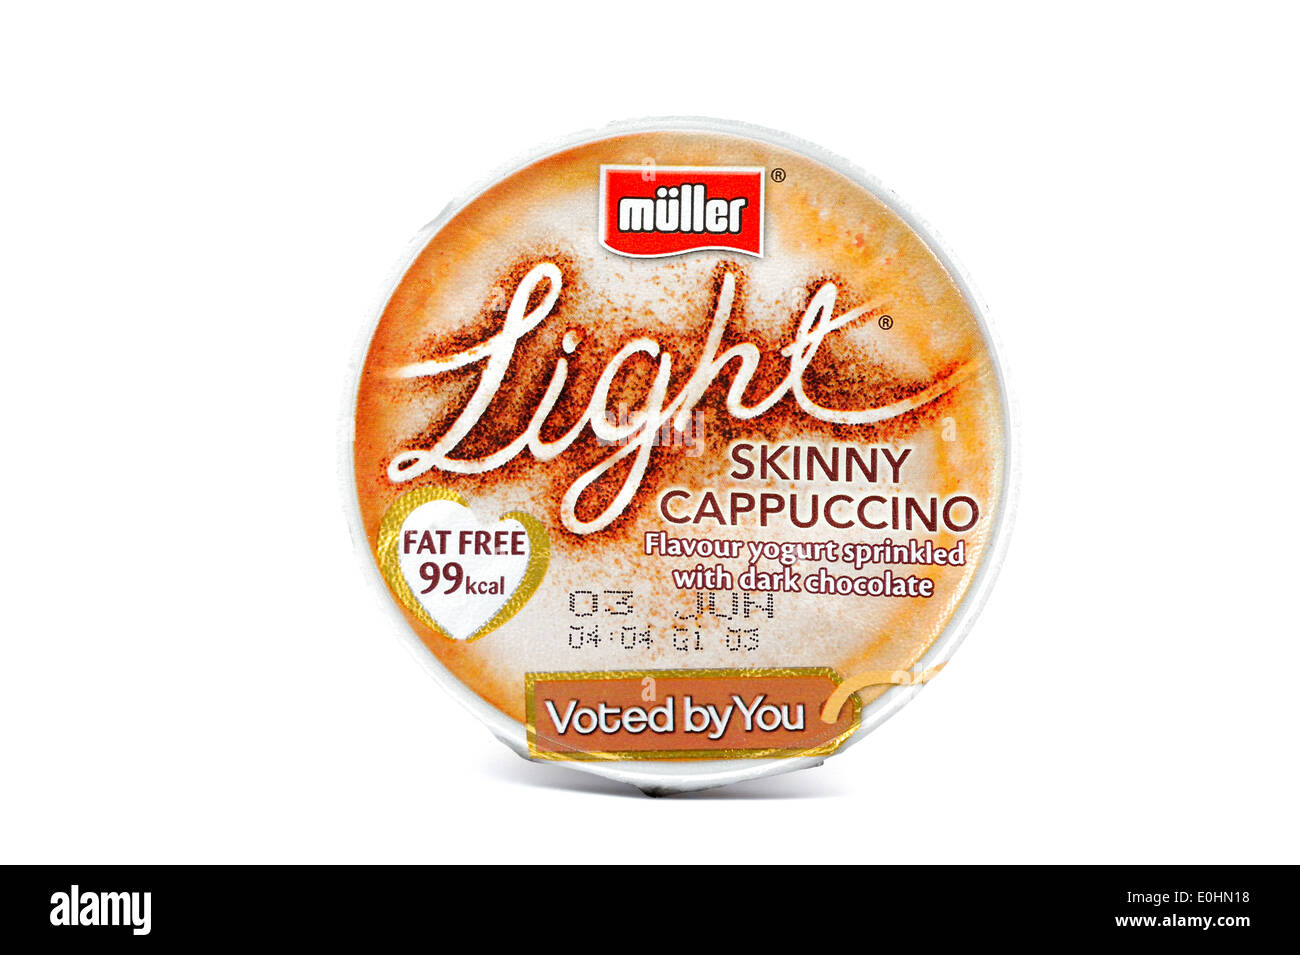 Muller light skinny cappuccino flavor yogurt pot Stock Photo